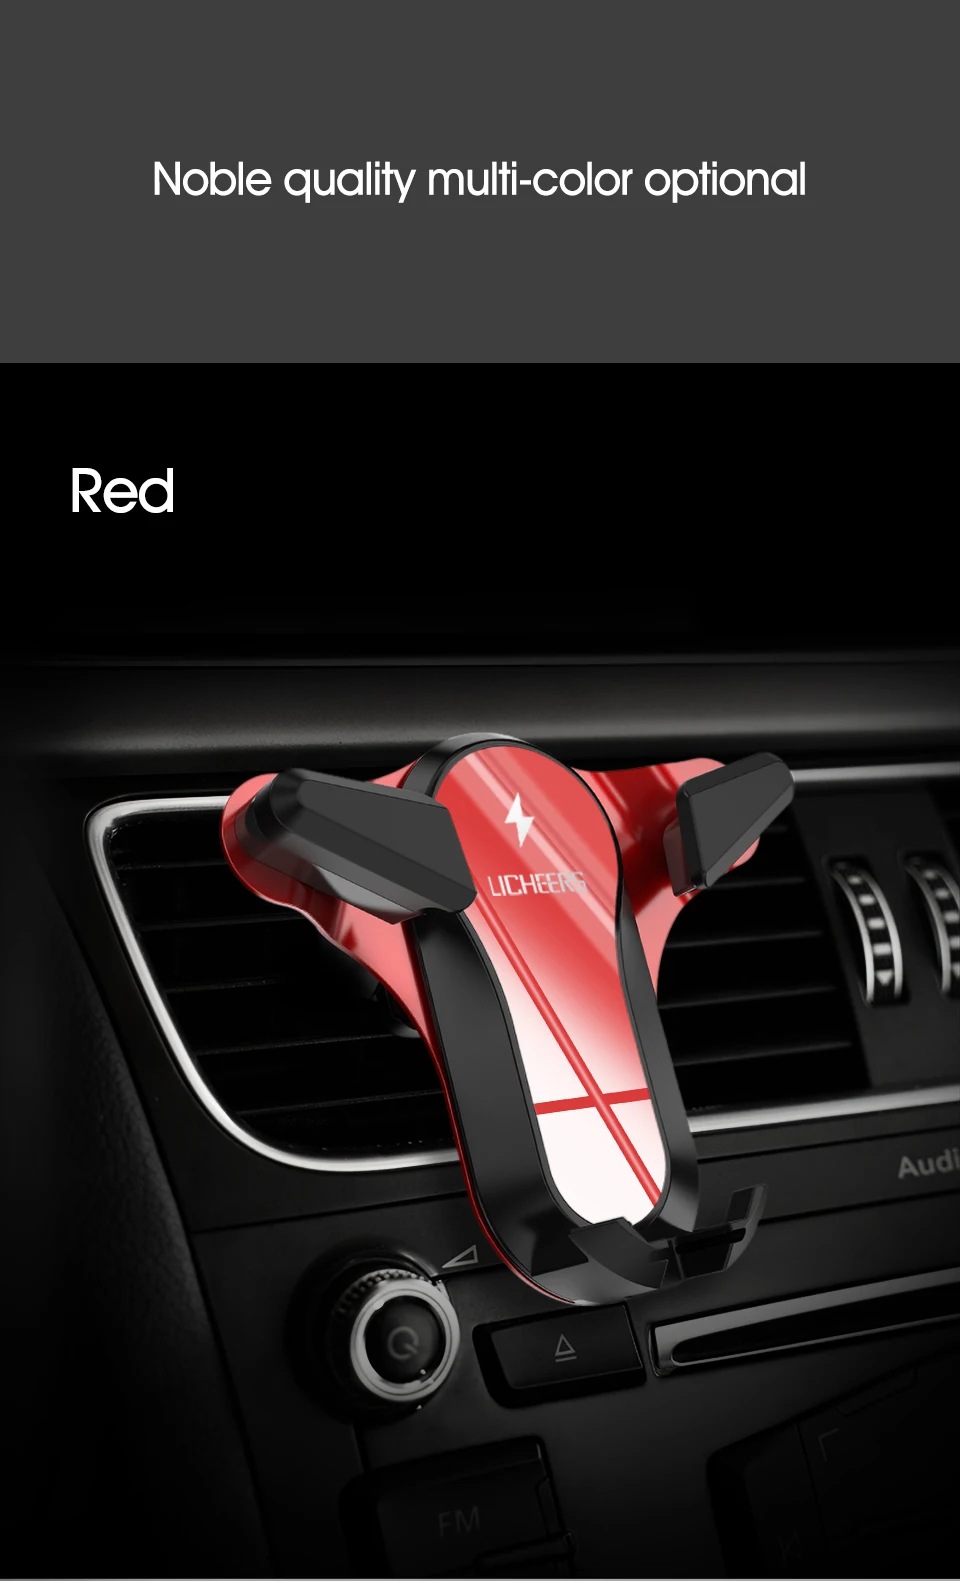 LINGCHEN Qi Беспроводной автомобиля Зарядное устройство для iPhone X XS XR samsung S10 S9 10 Вт Беспроводной Зарядное устройство быстрой зарядки, устанавливаемое на вентиляционное отверстие в салоне автомобиля Автомобильный держатель для телефона на магните